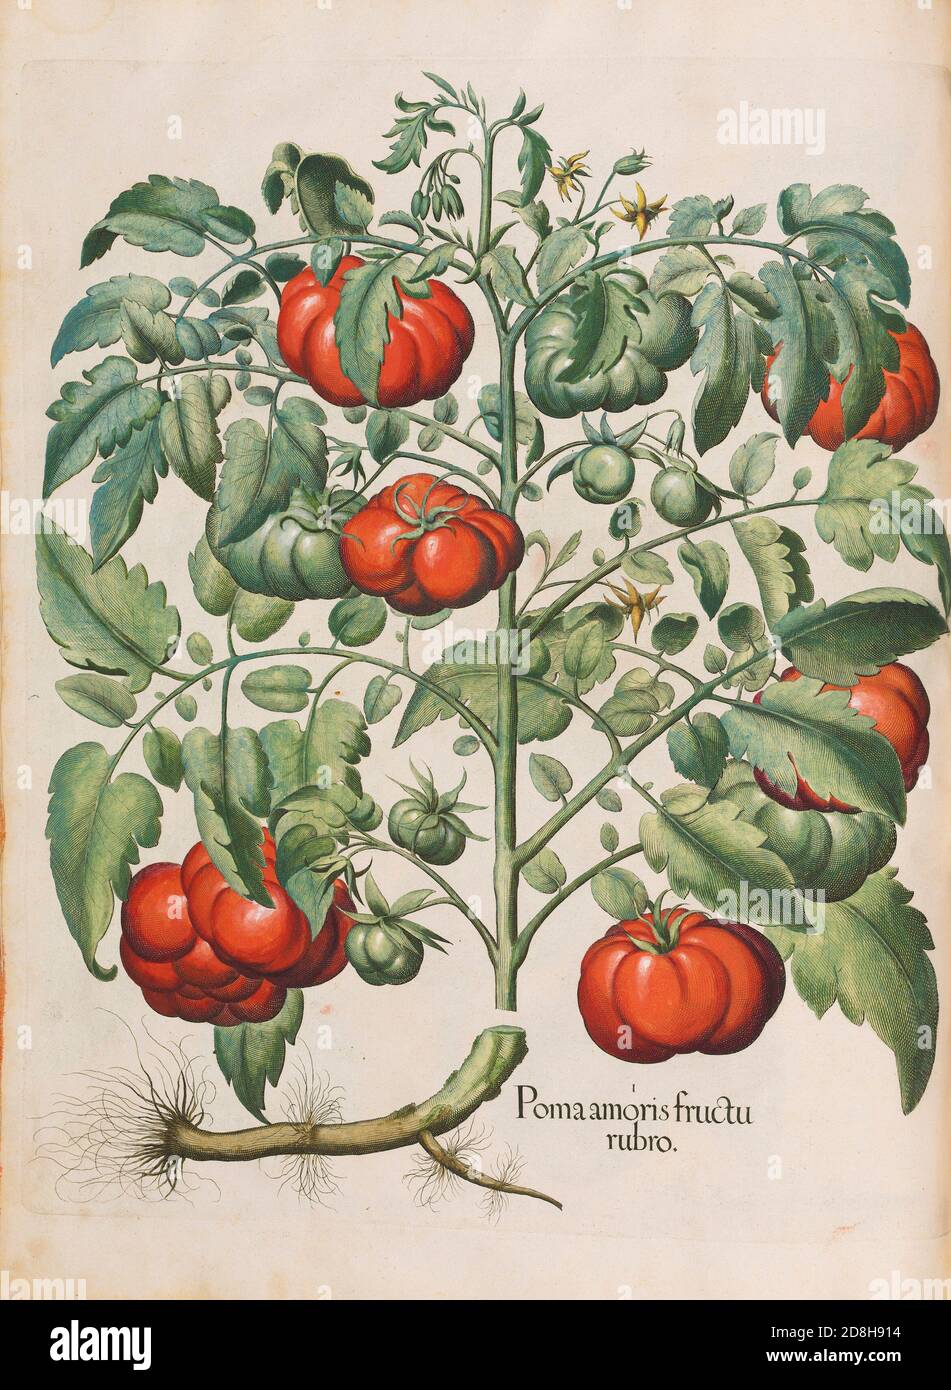 Tomates. Poma amoris frsima rubro, illustration botanique de Basil Besler du Hortus Eystettensis, produit par Basilius Besler en 1613. Banque D'Images